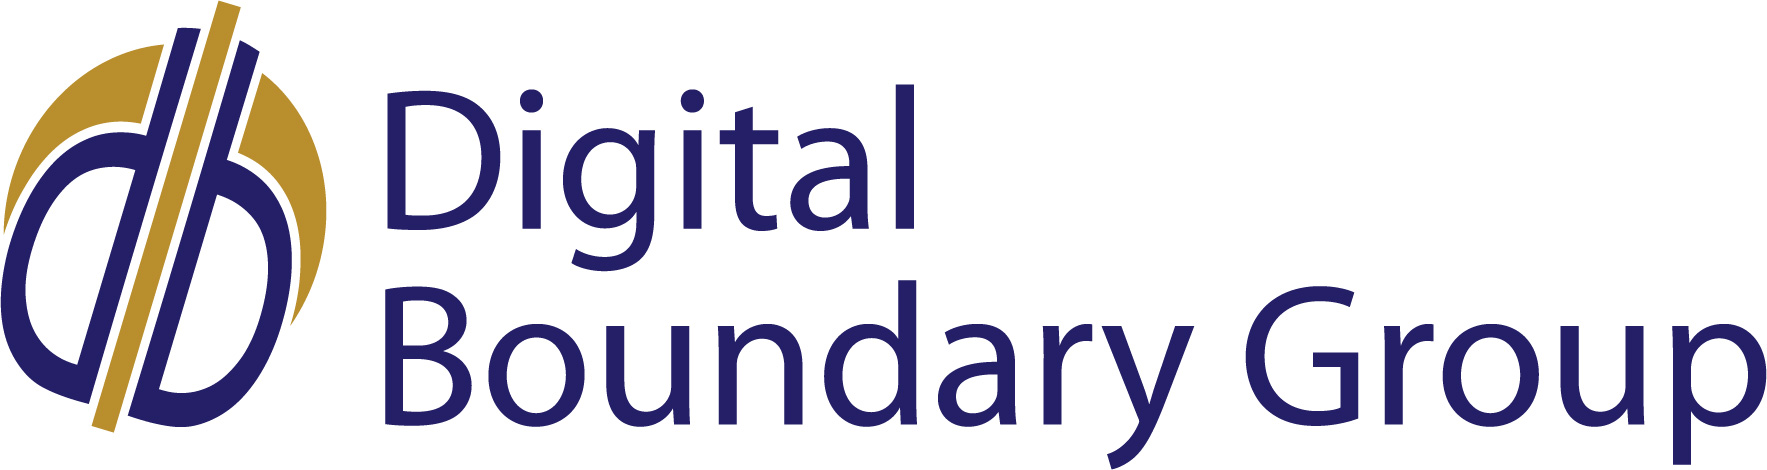 digital boundary